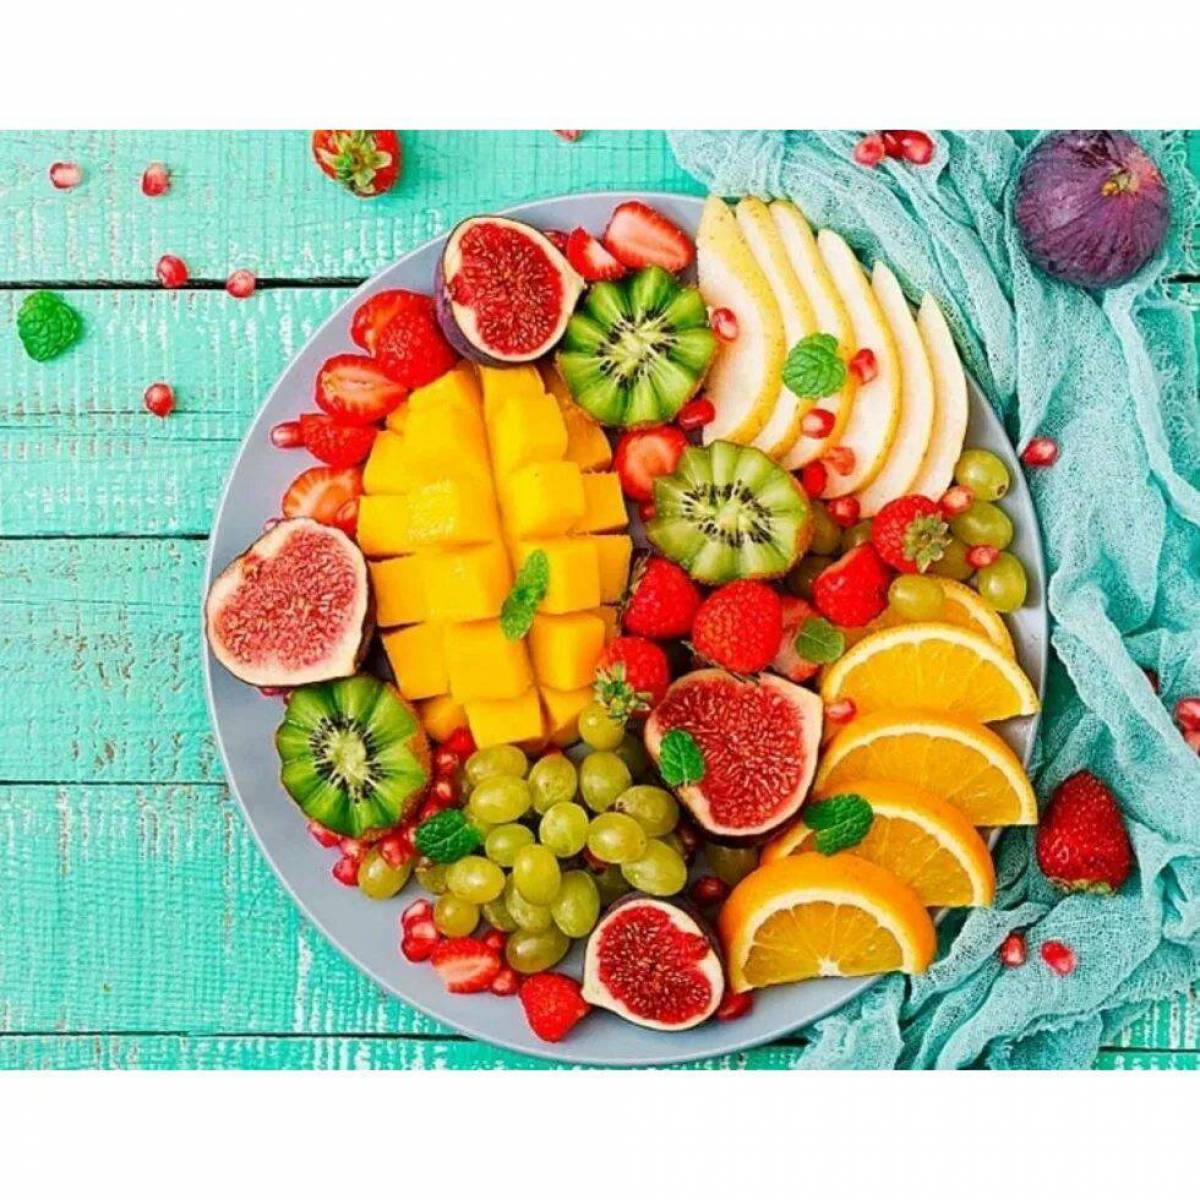 Тарелка с фруктами #30